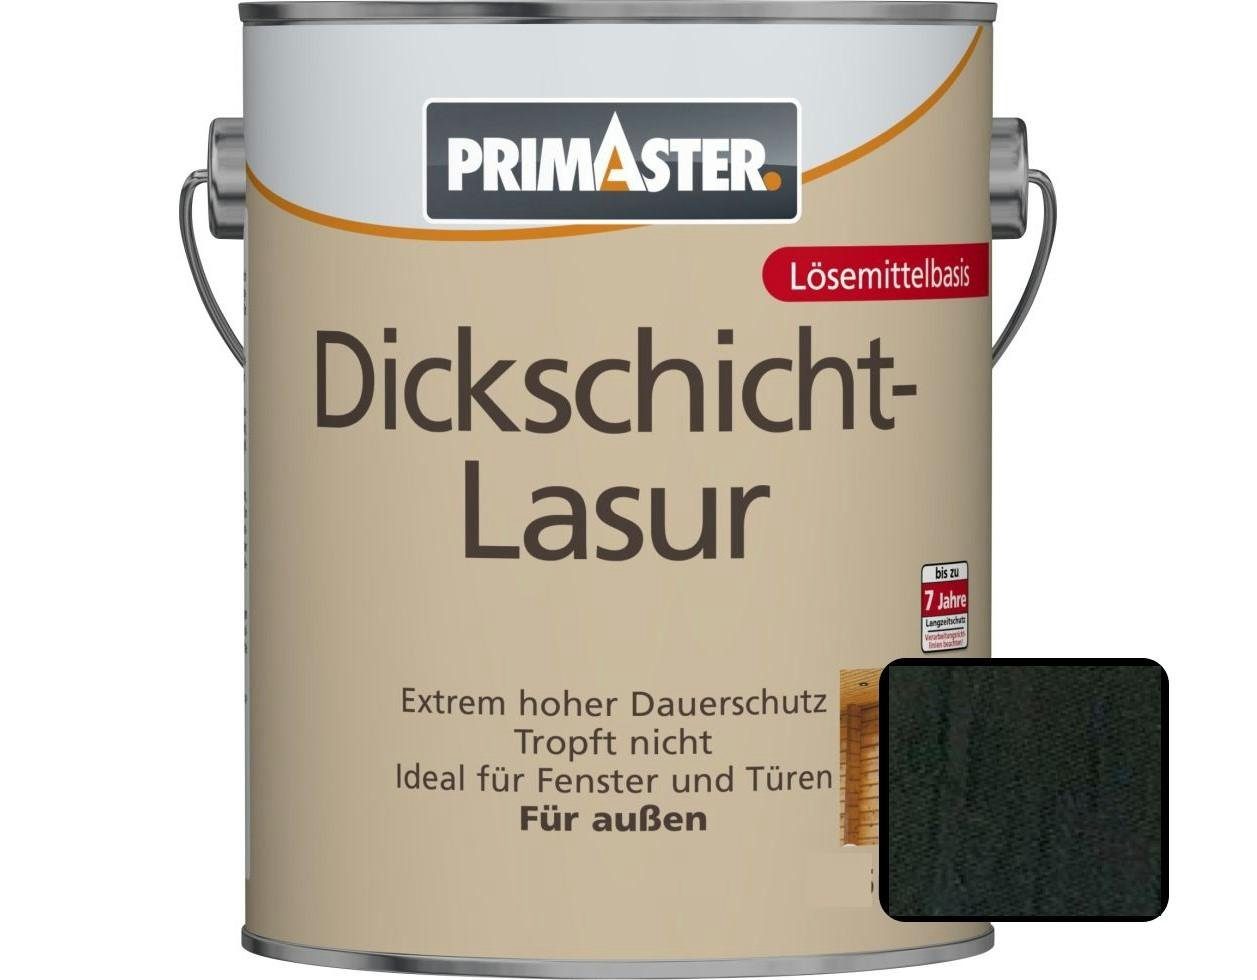 2,5 ebenholz Primaster Dickschichtlasur L Lasur Primaster